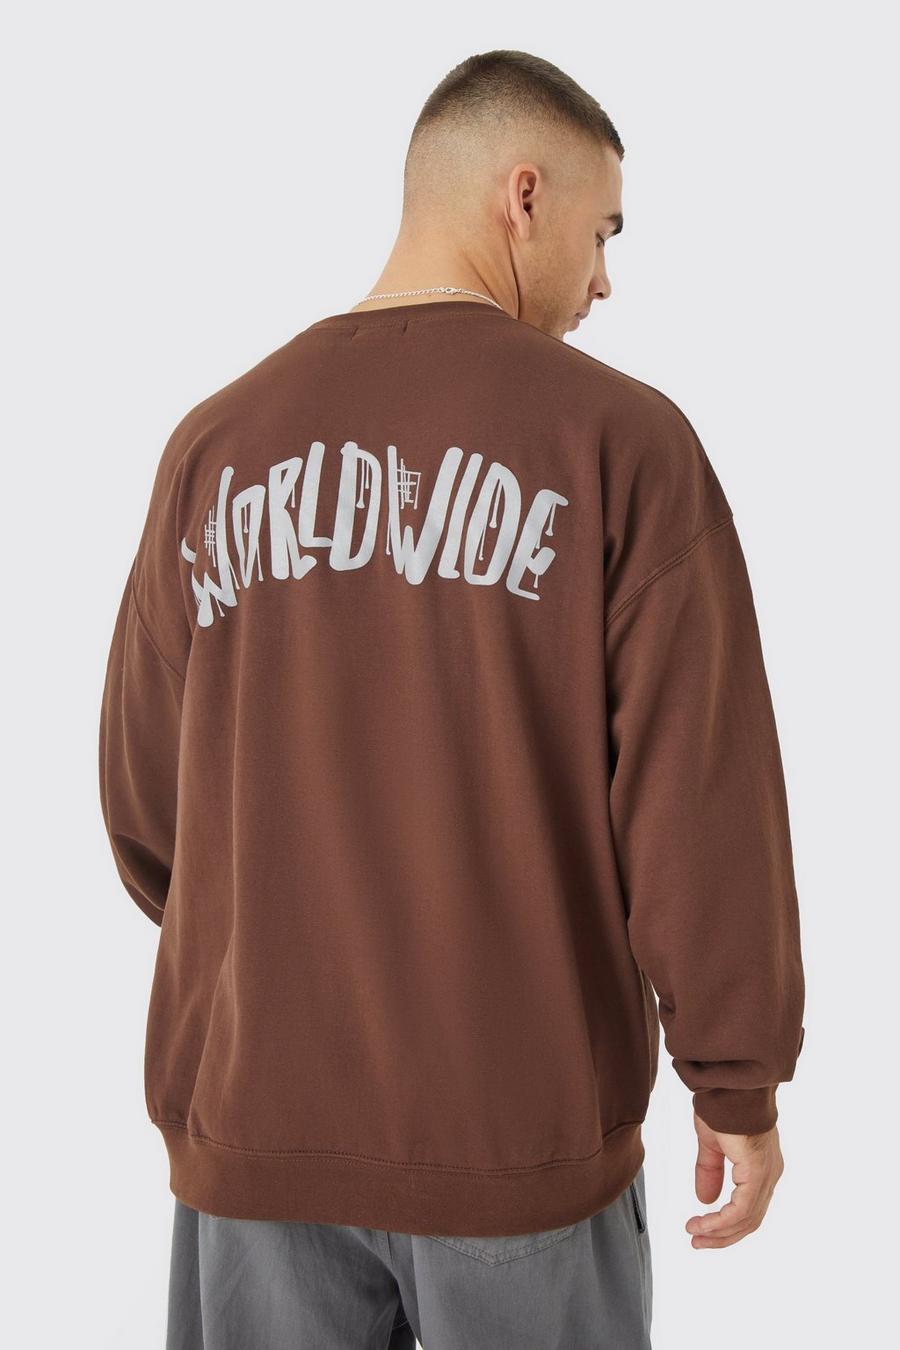 Chocolate brown Oversized Worldwide Graphic Sweatshirt